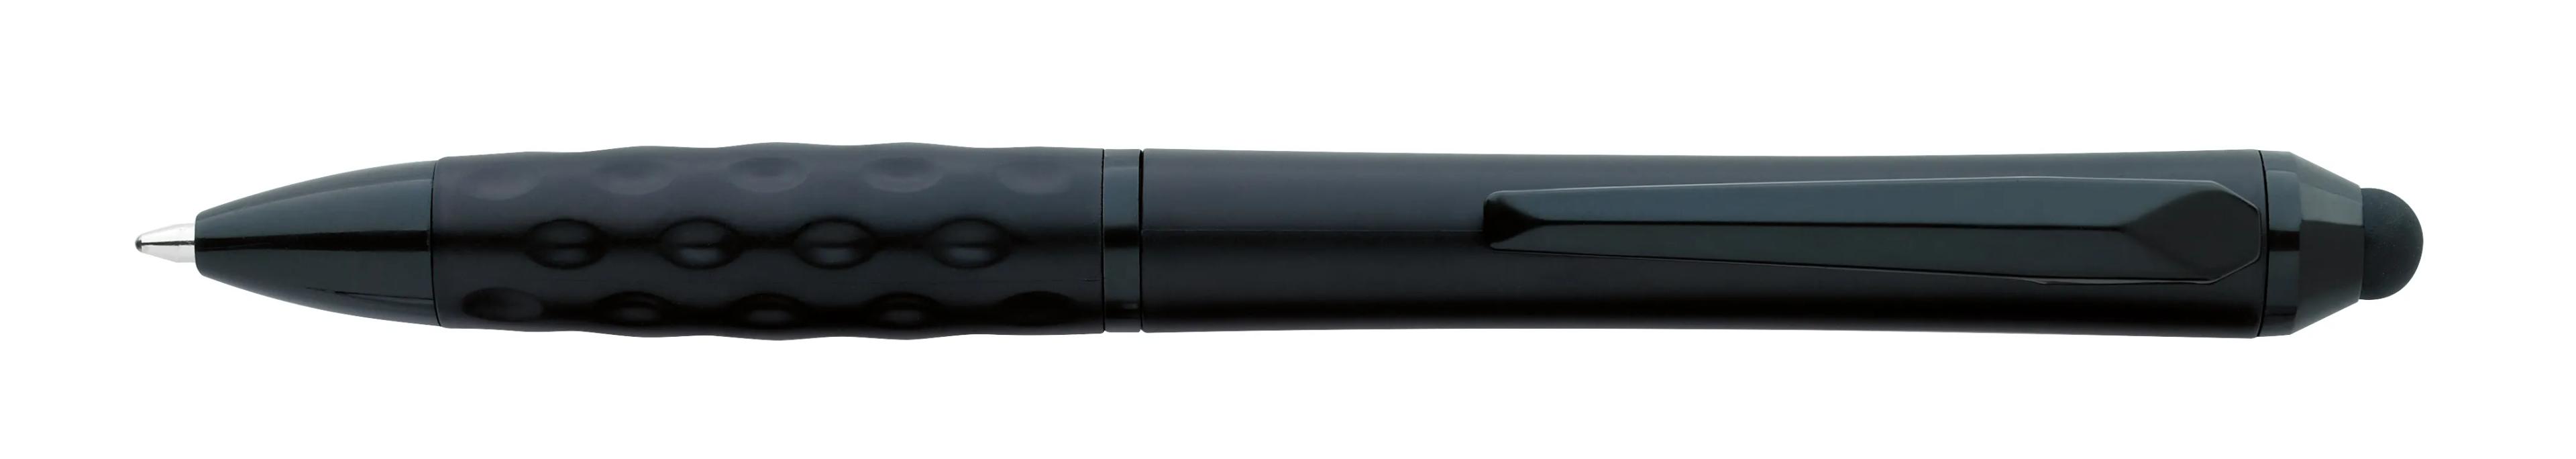 Tev Metallic Stylus Pen 48 of 77